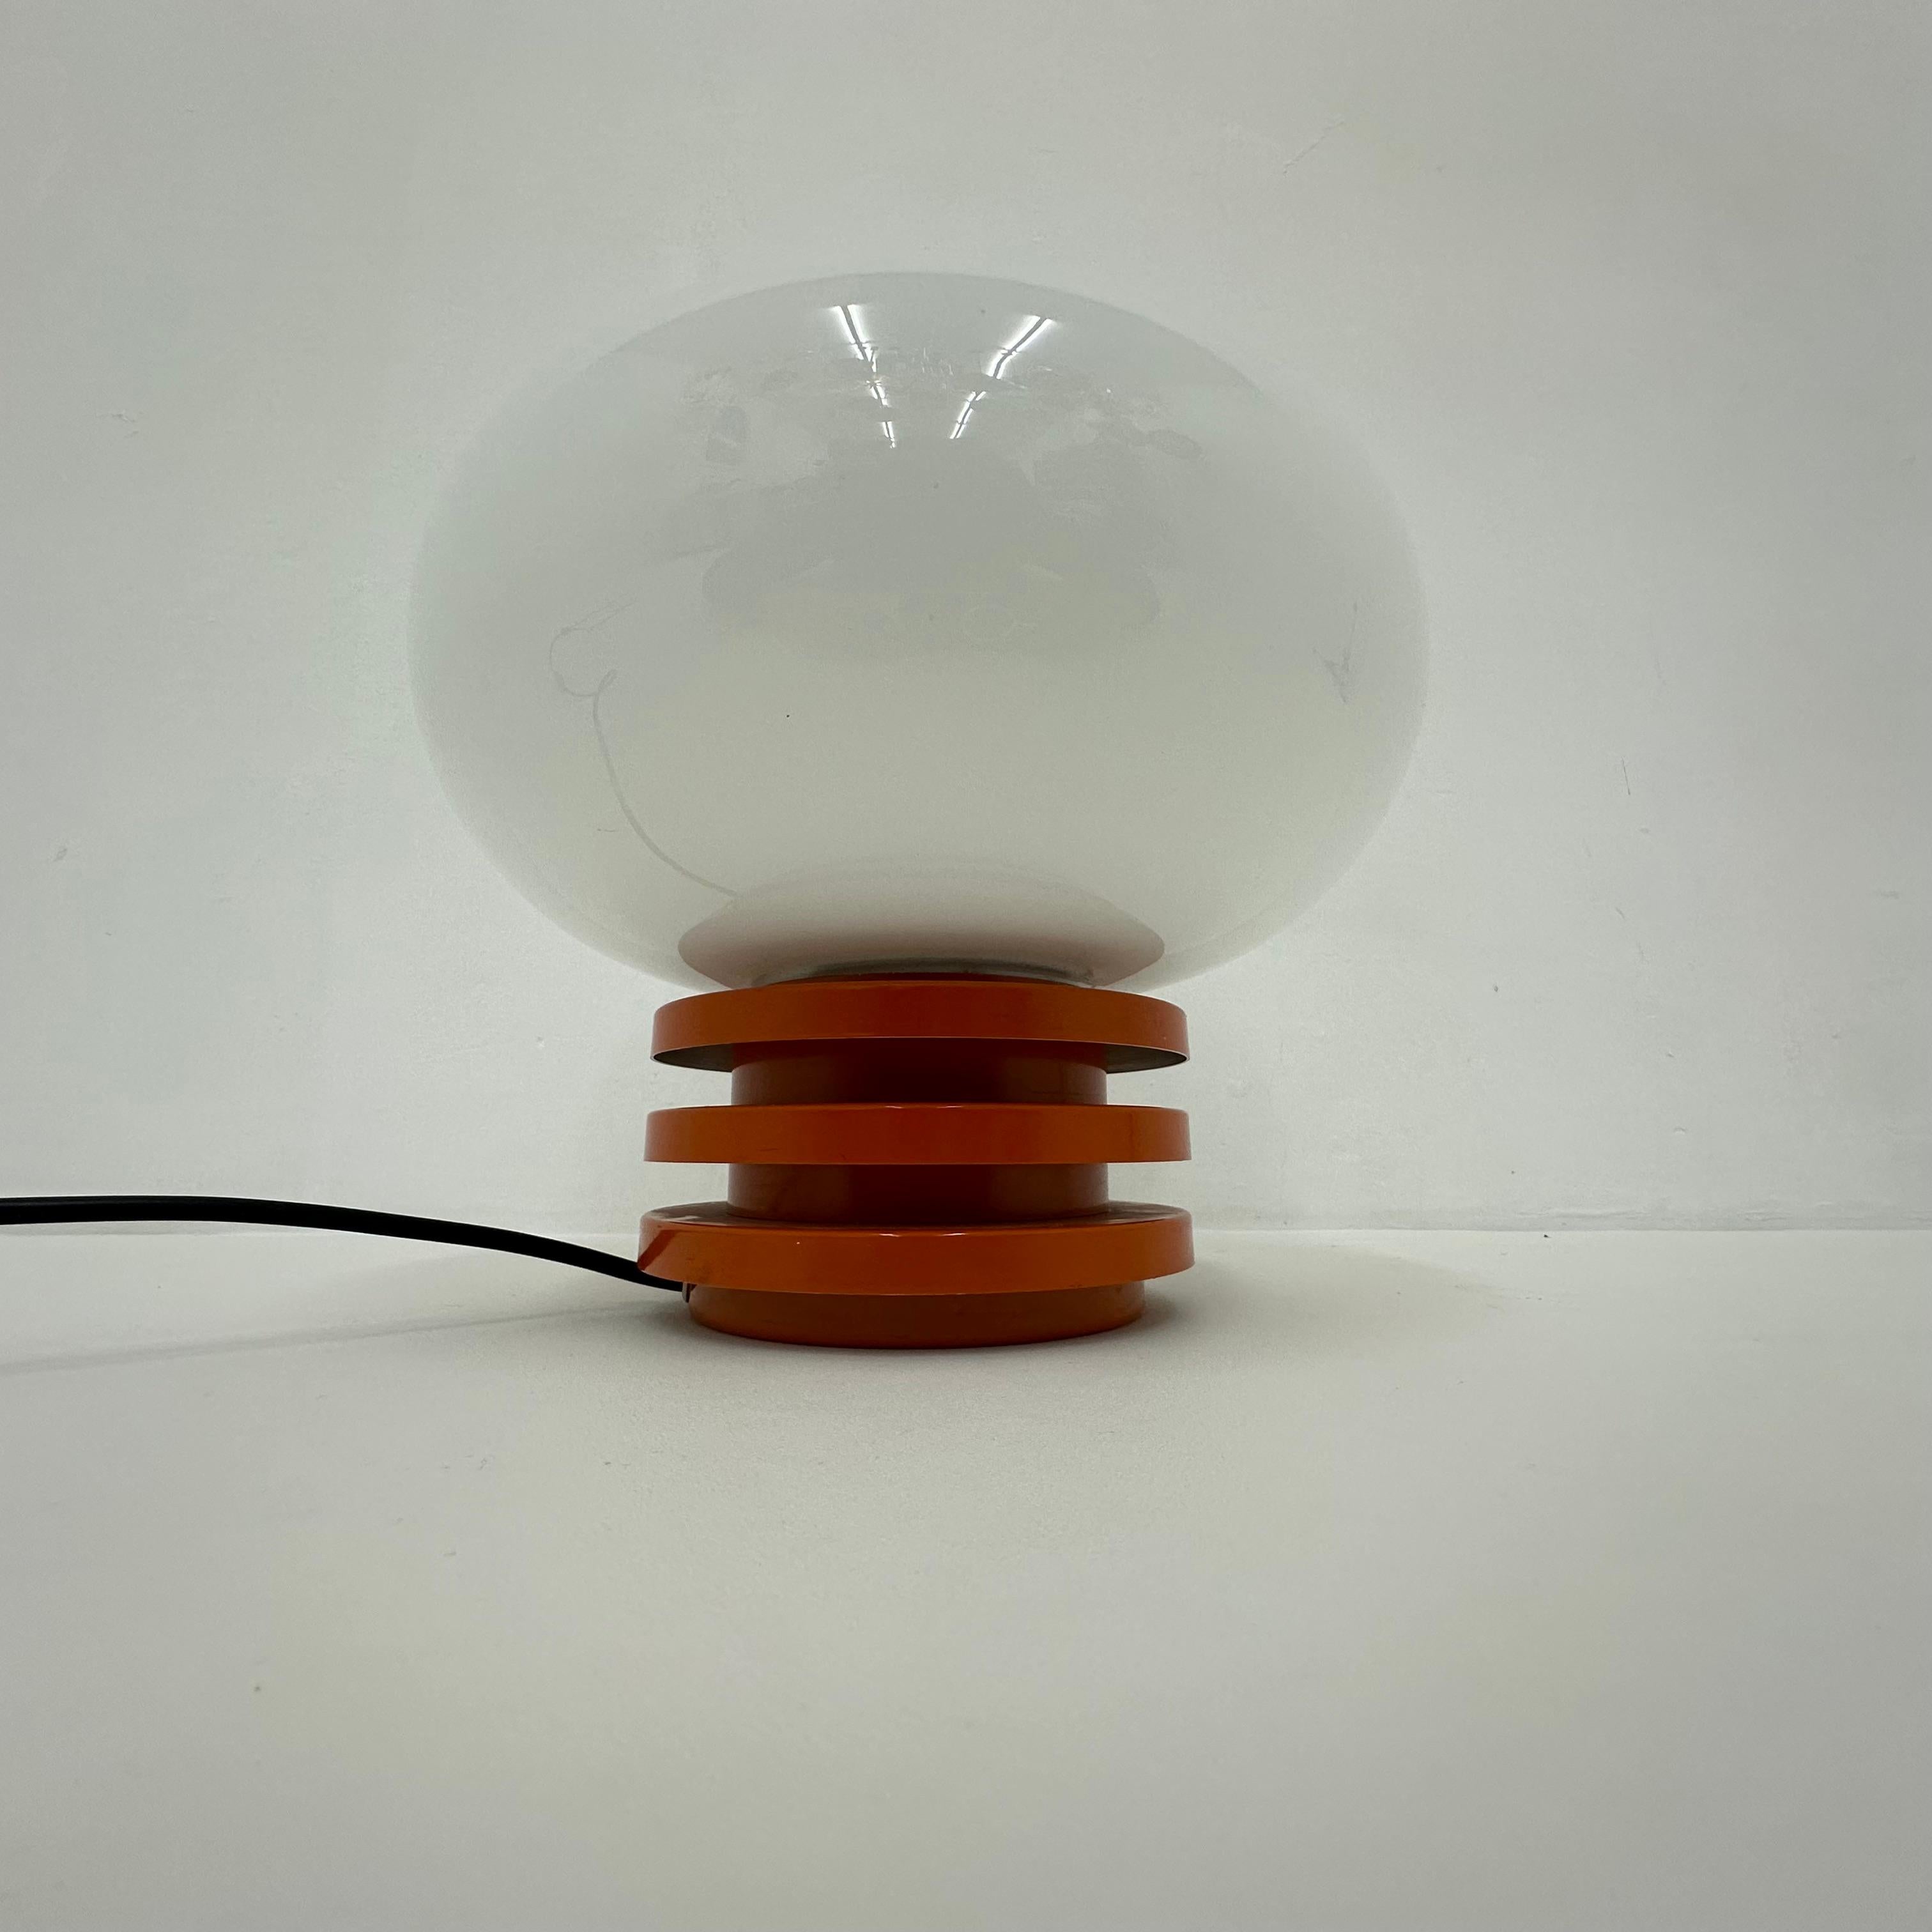 Dimensions: 28cm H, 31cm diameter
Material: Metal , glass
Color: Orange , white